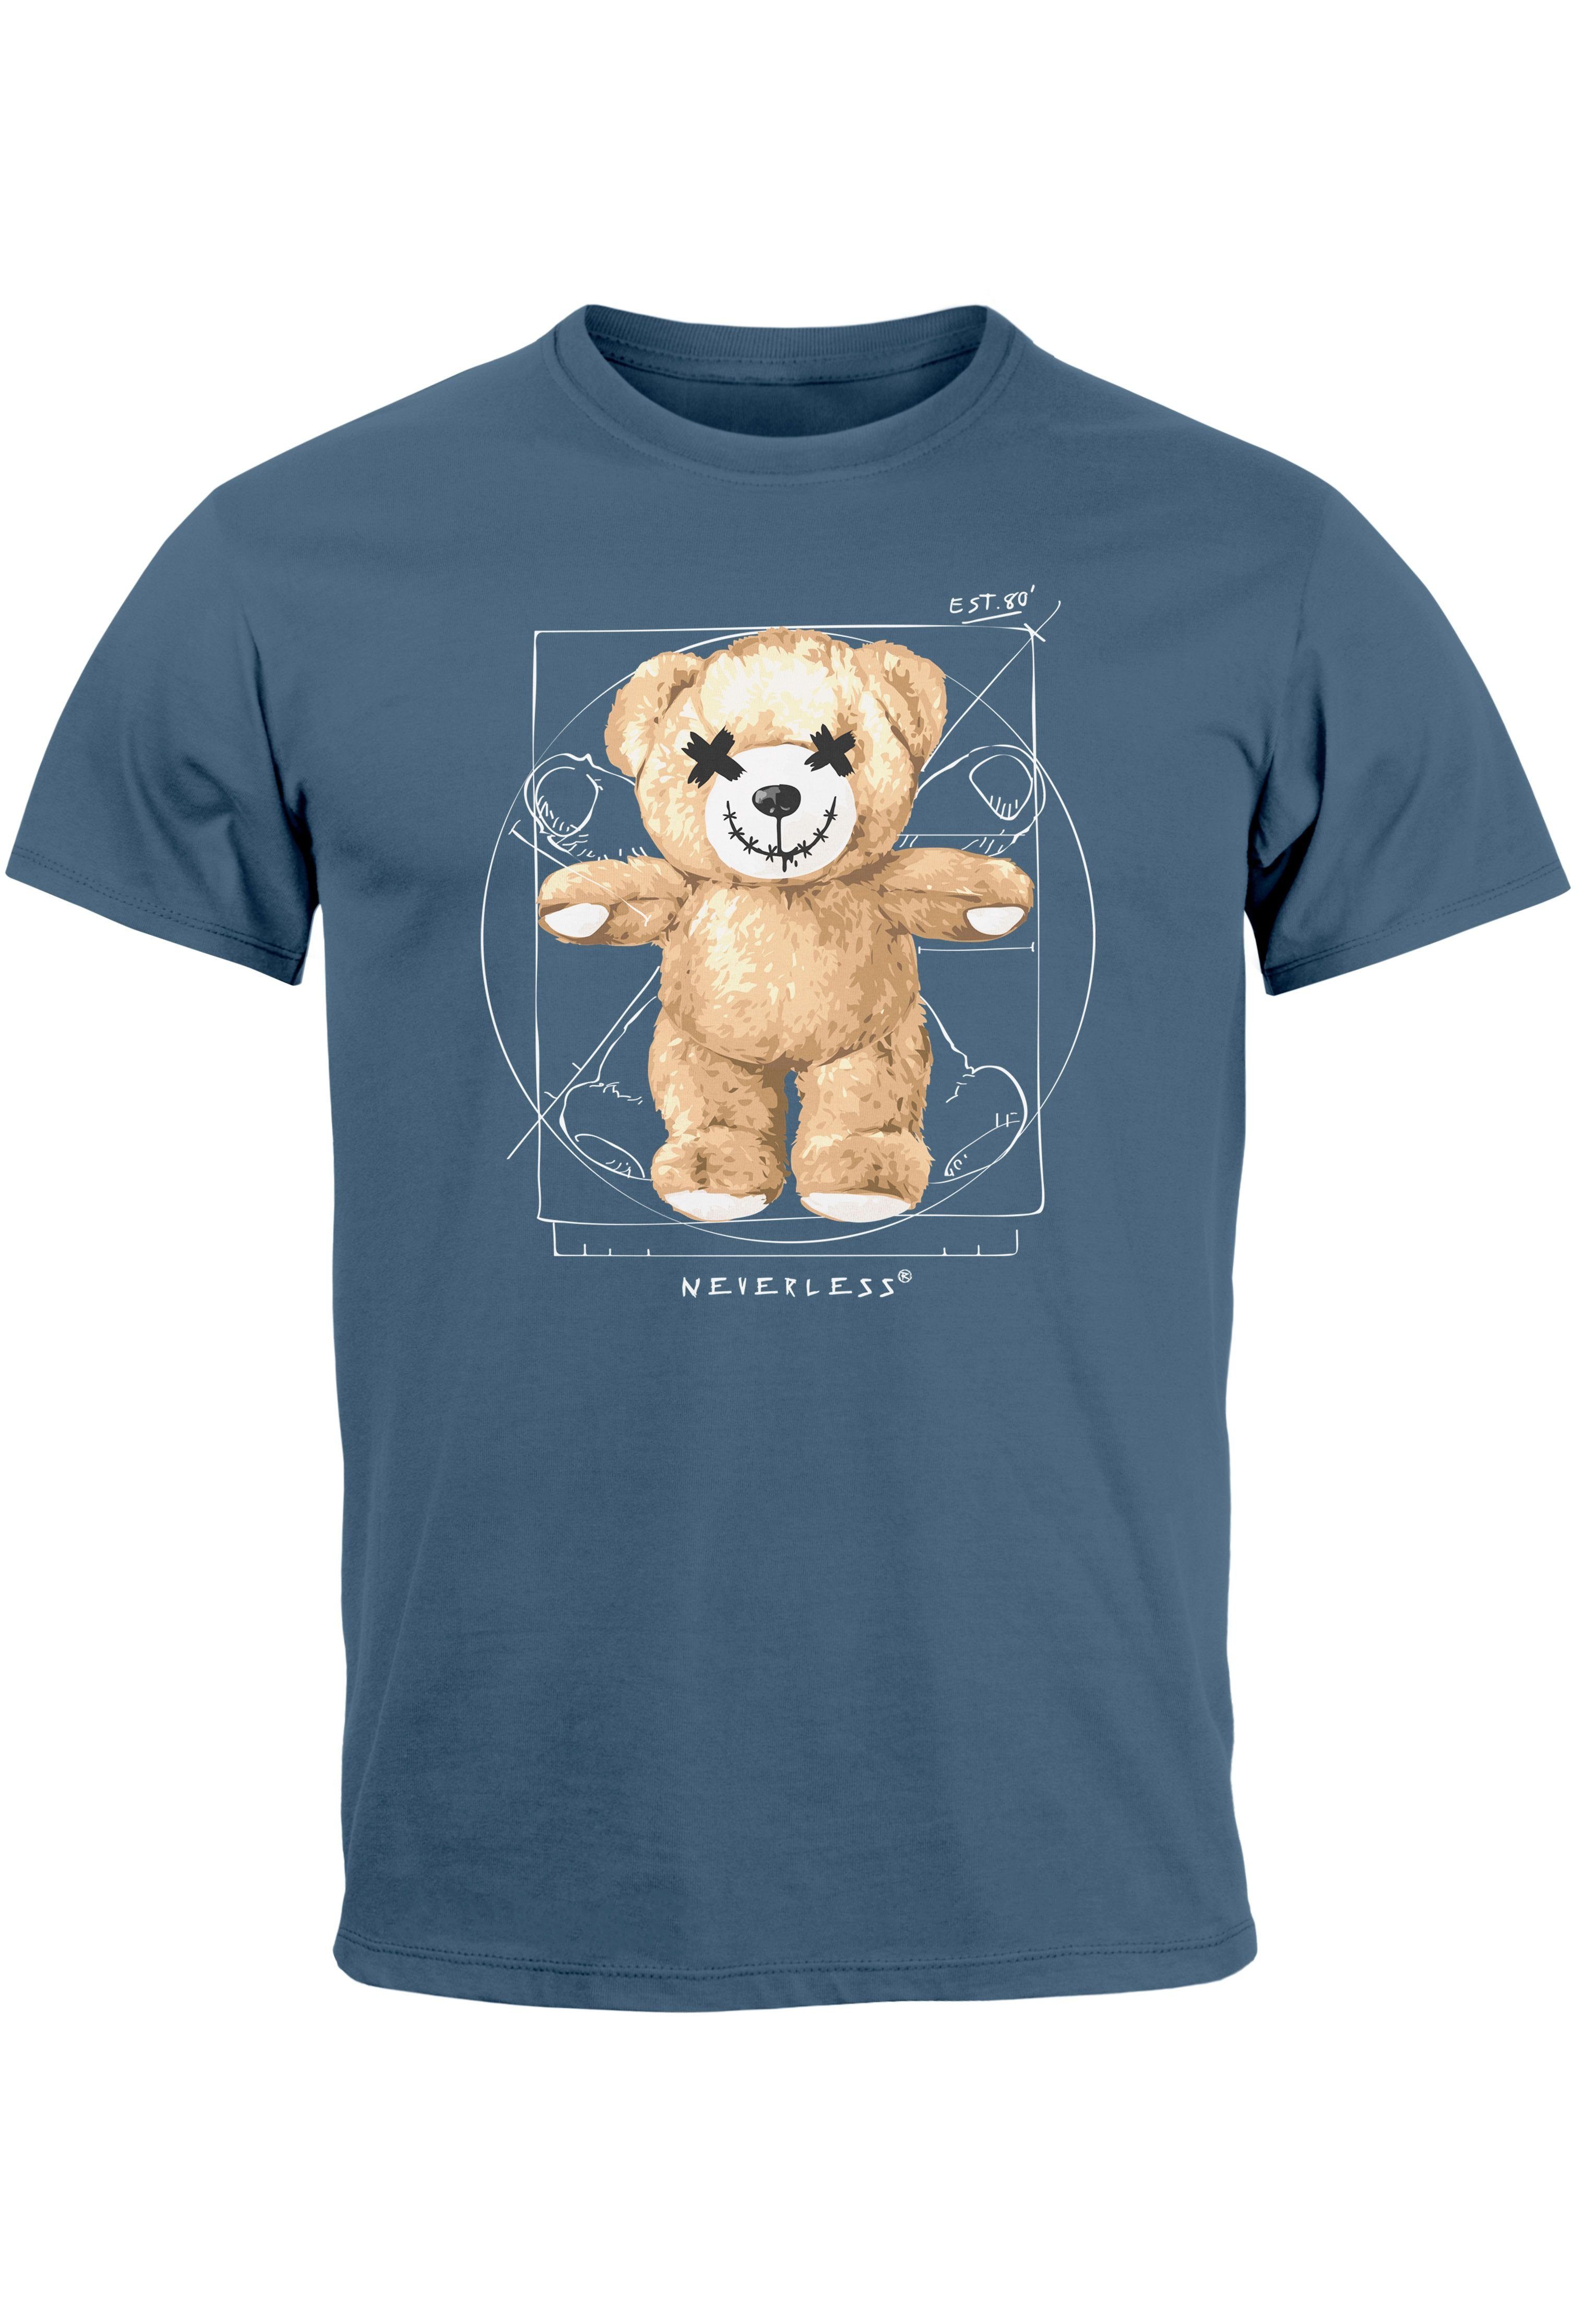 Neverless Print-Shirt Herren T-Shirt Print Teddy Bär DaVinci Meme Parodie Fashion Streetstyl mit Print denim blue